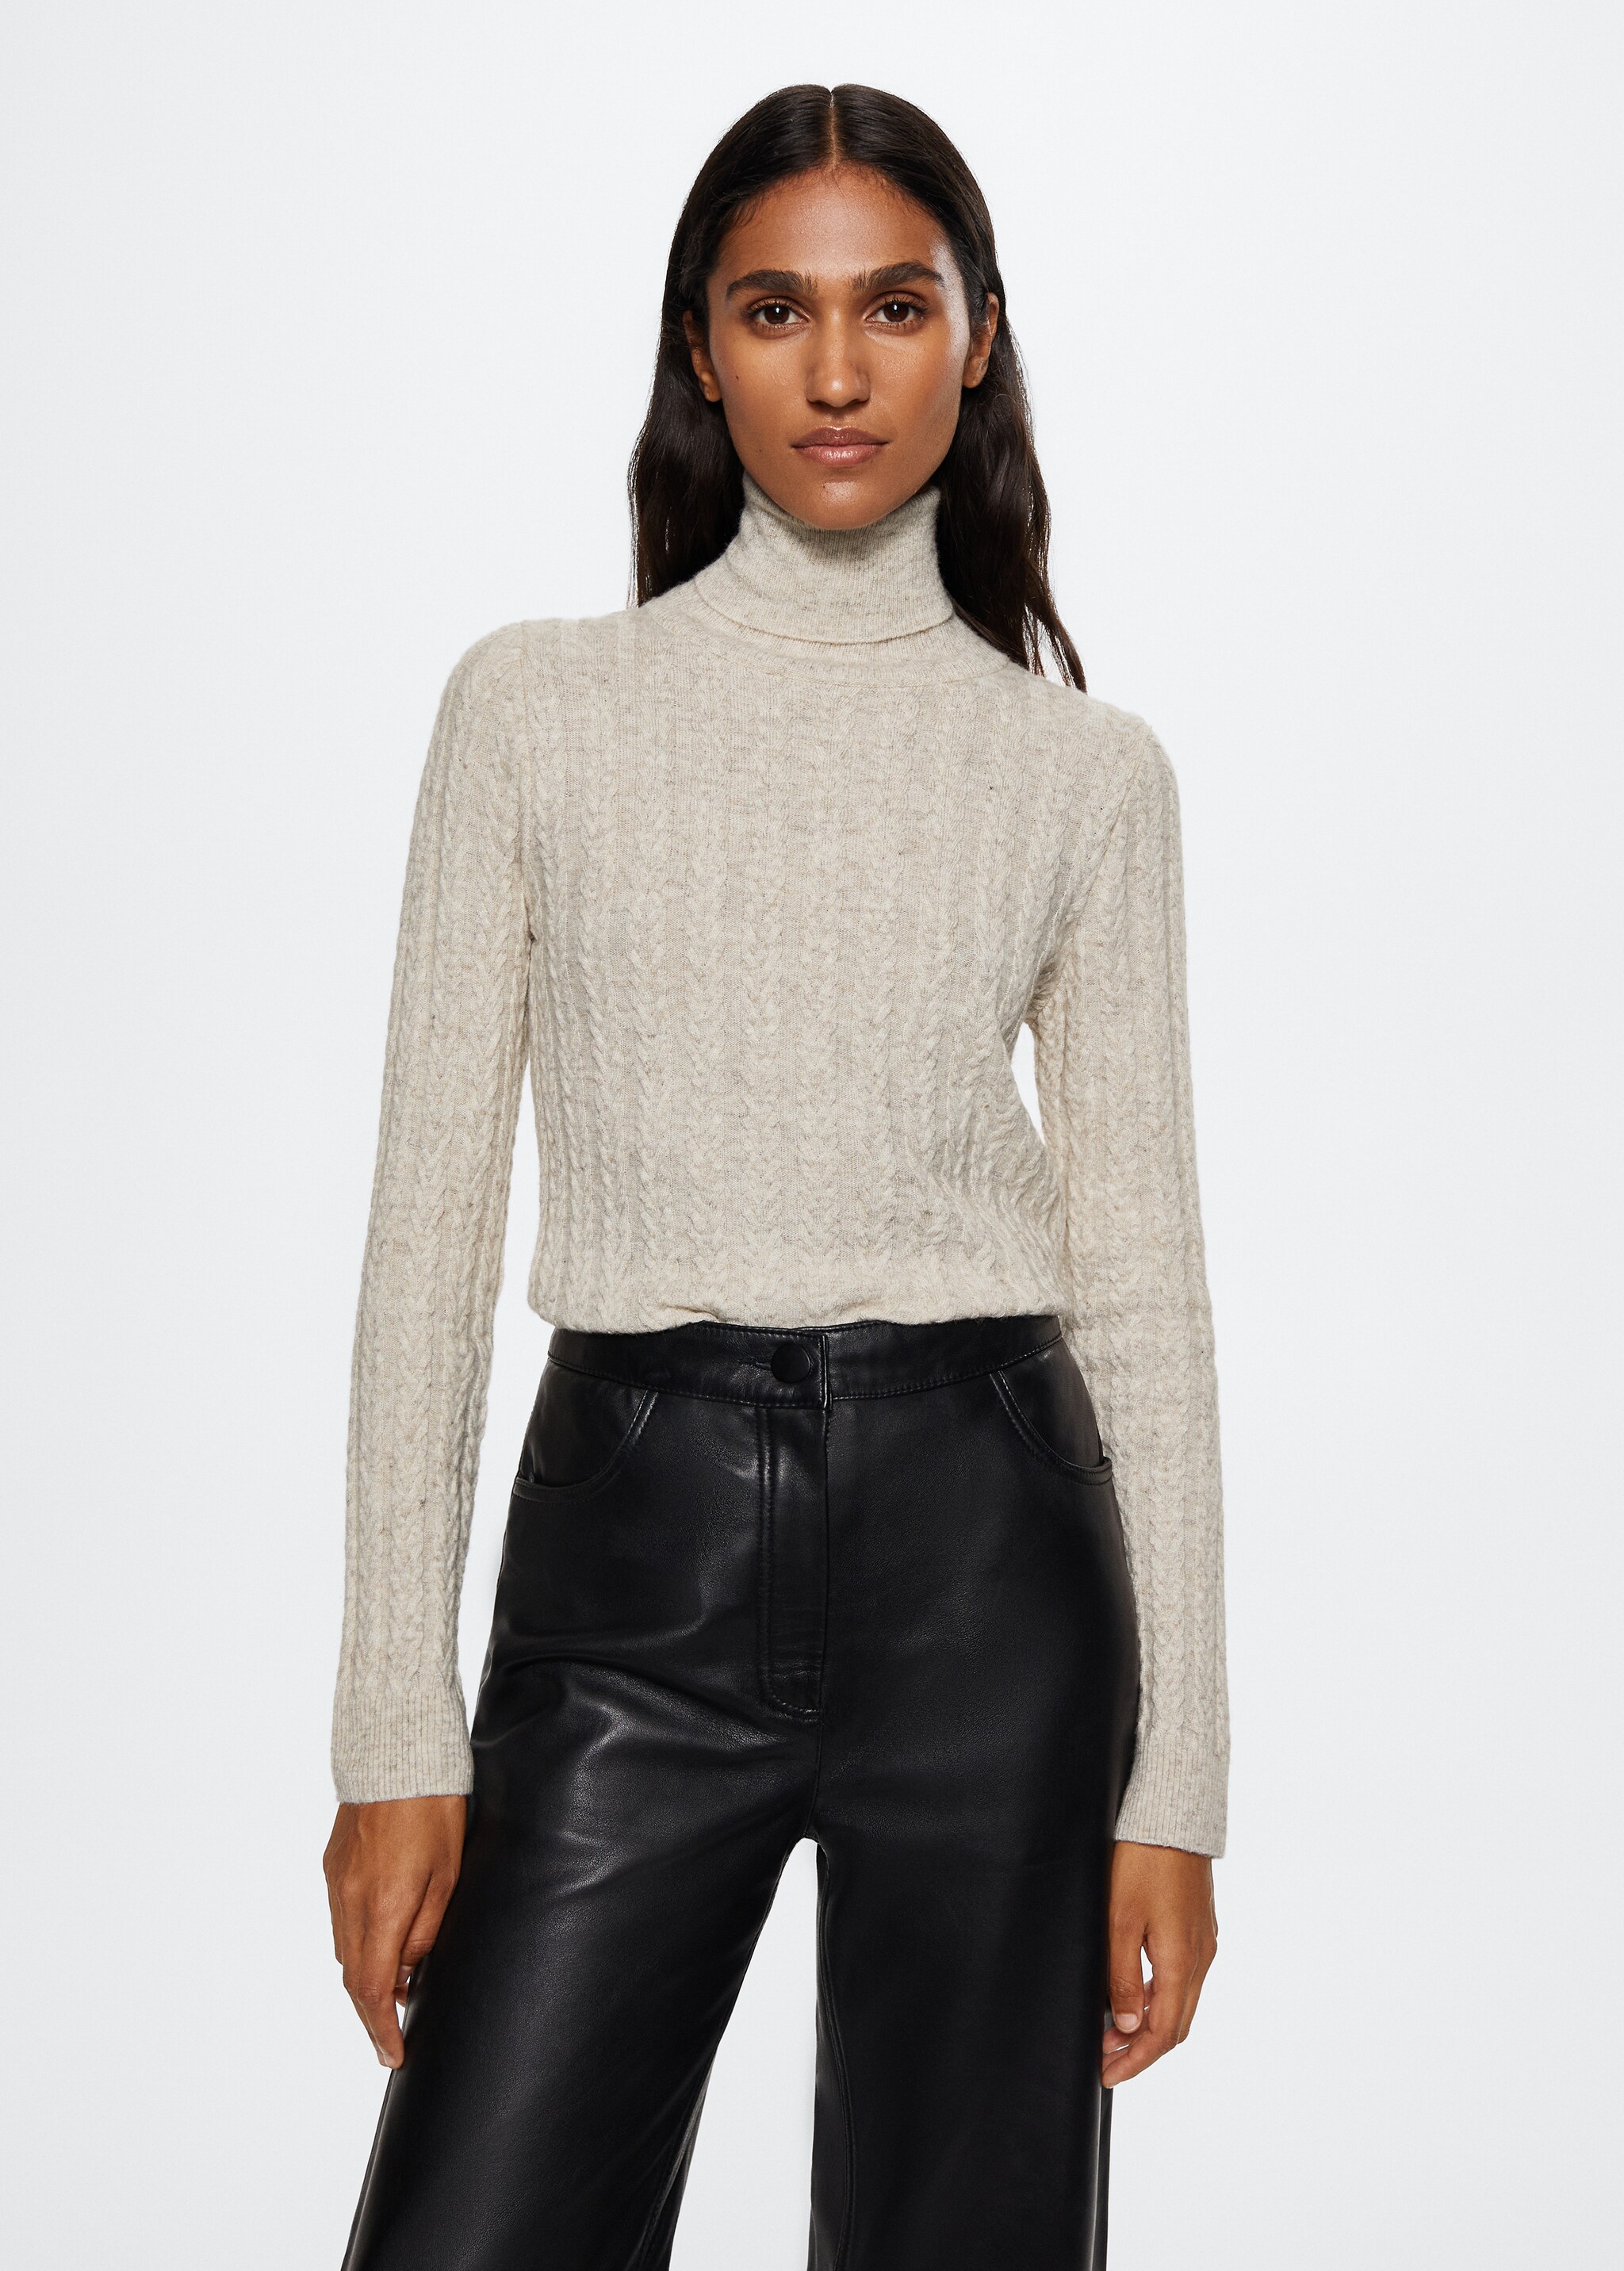 Cashmere wool sweater - Medium plane